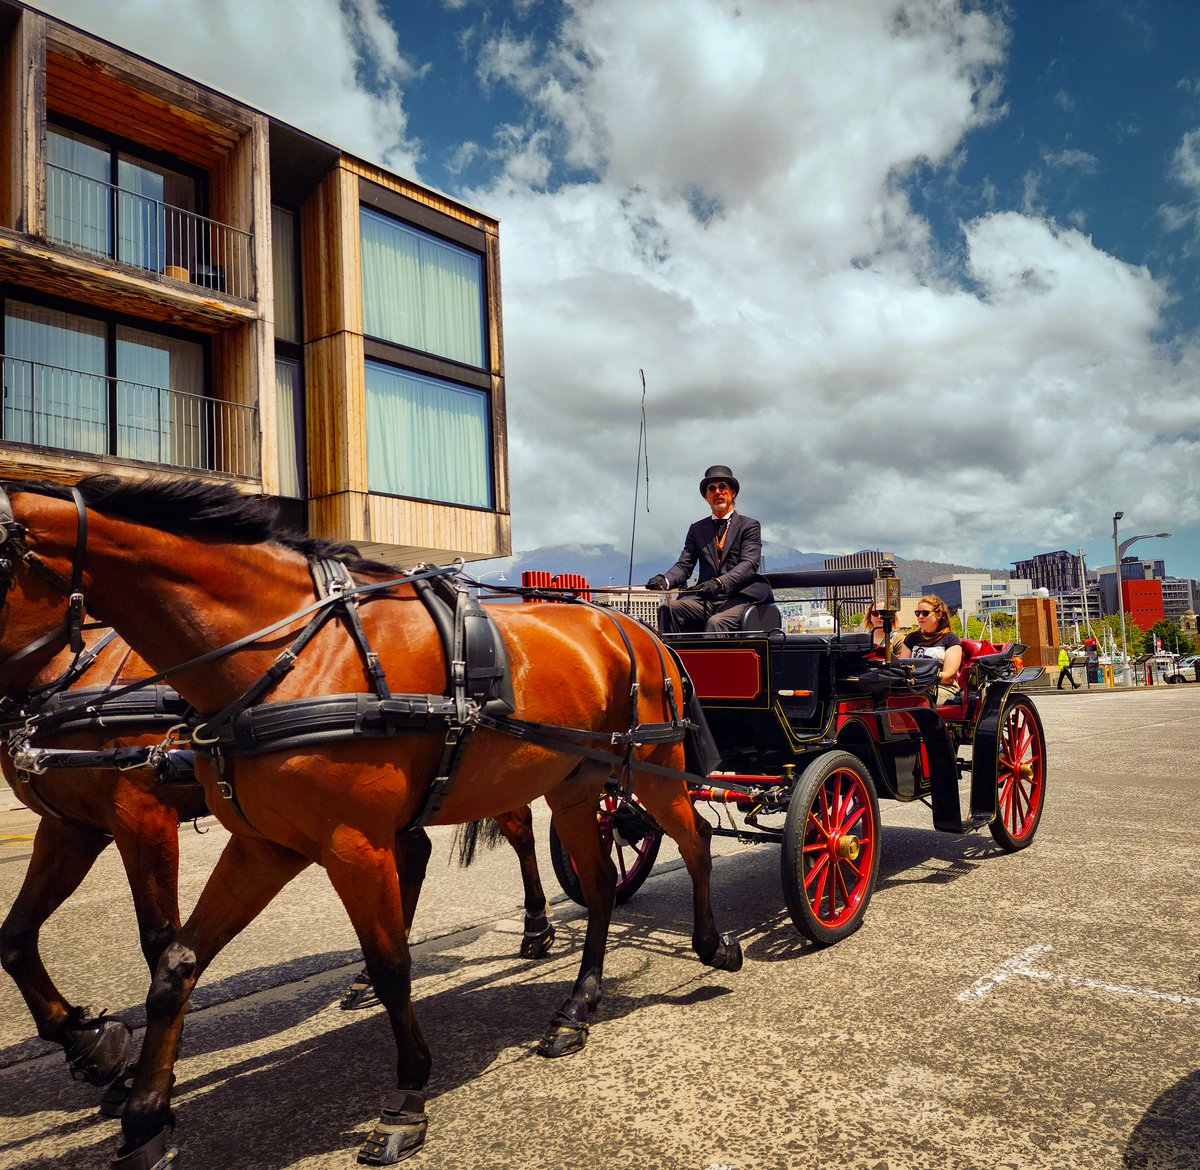 Heritage Horse Drawn Carriages in Hobart.

#horses #horseandcarriage #carriage #sunnyday #sunny #Hobart #Tasmania #tasmanianscenery #photo #photoart